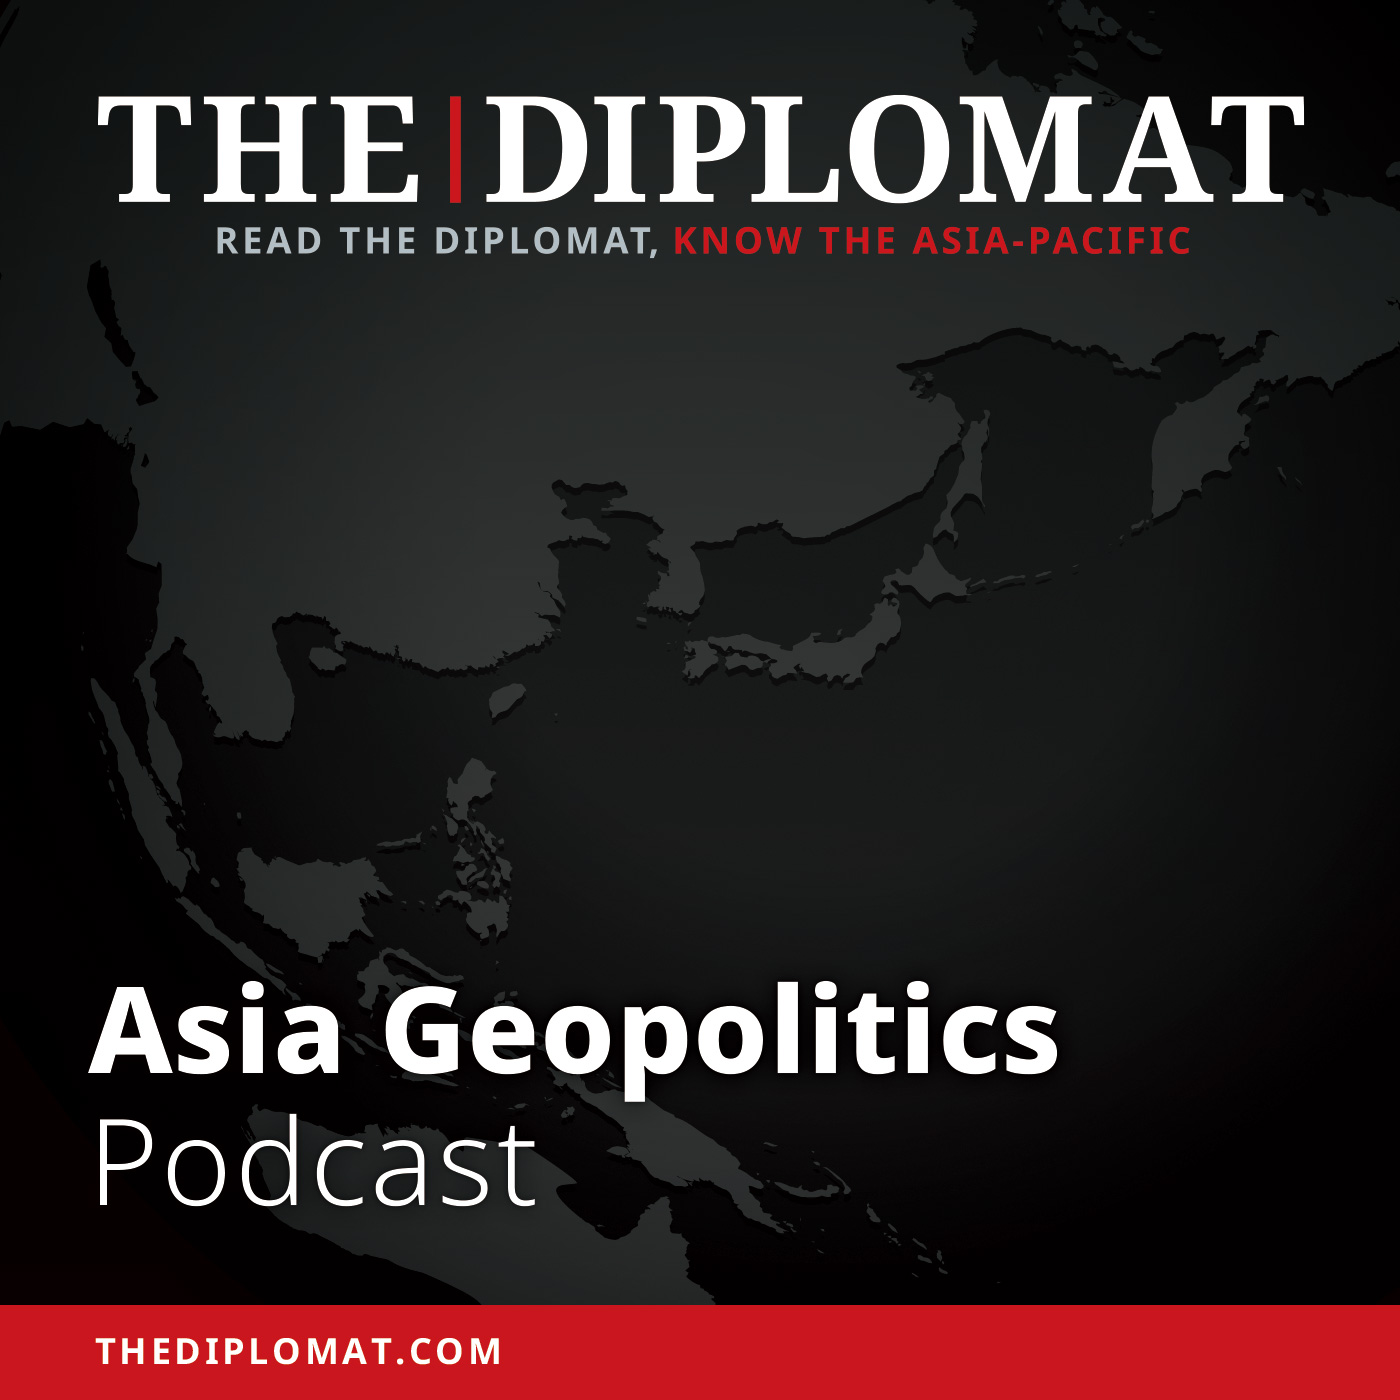 Asia Geopolitics podcast